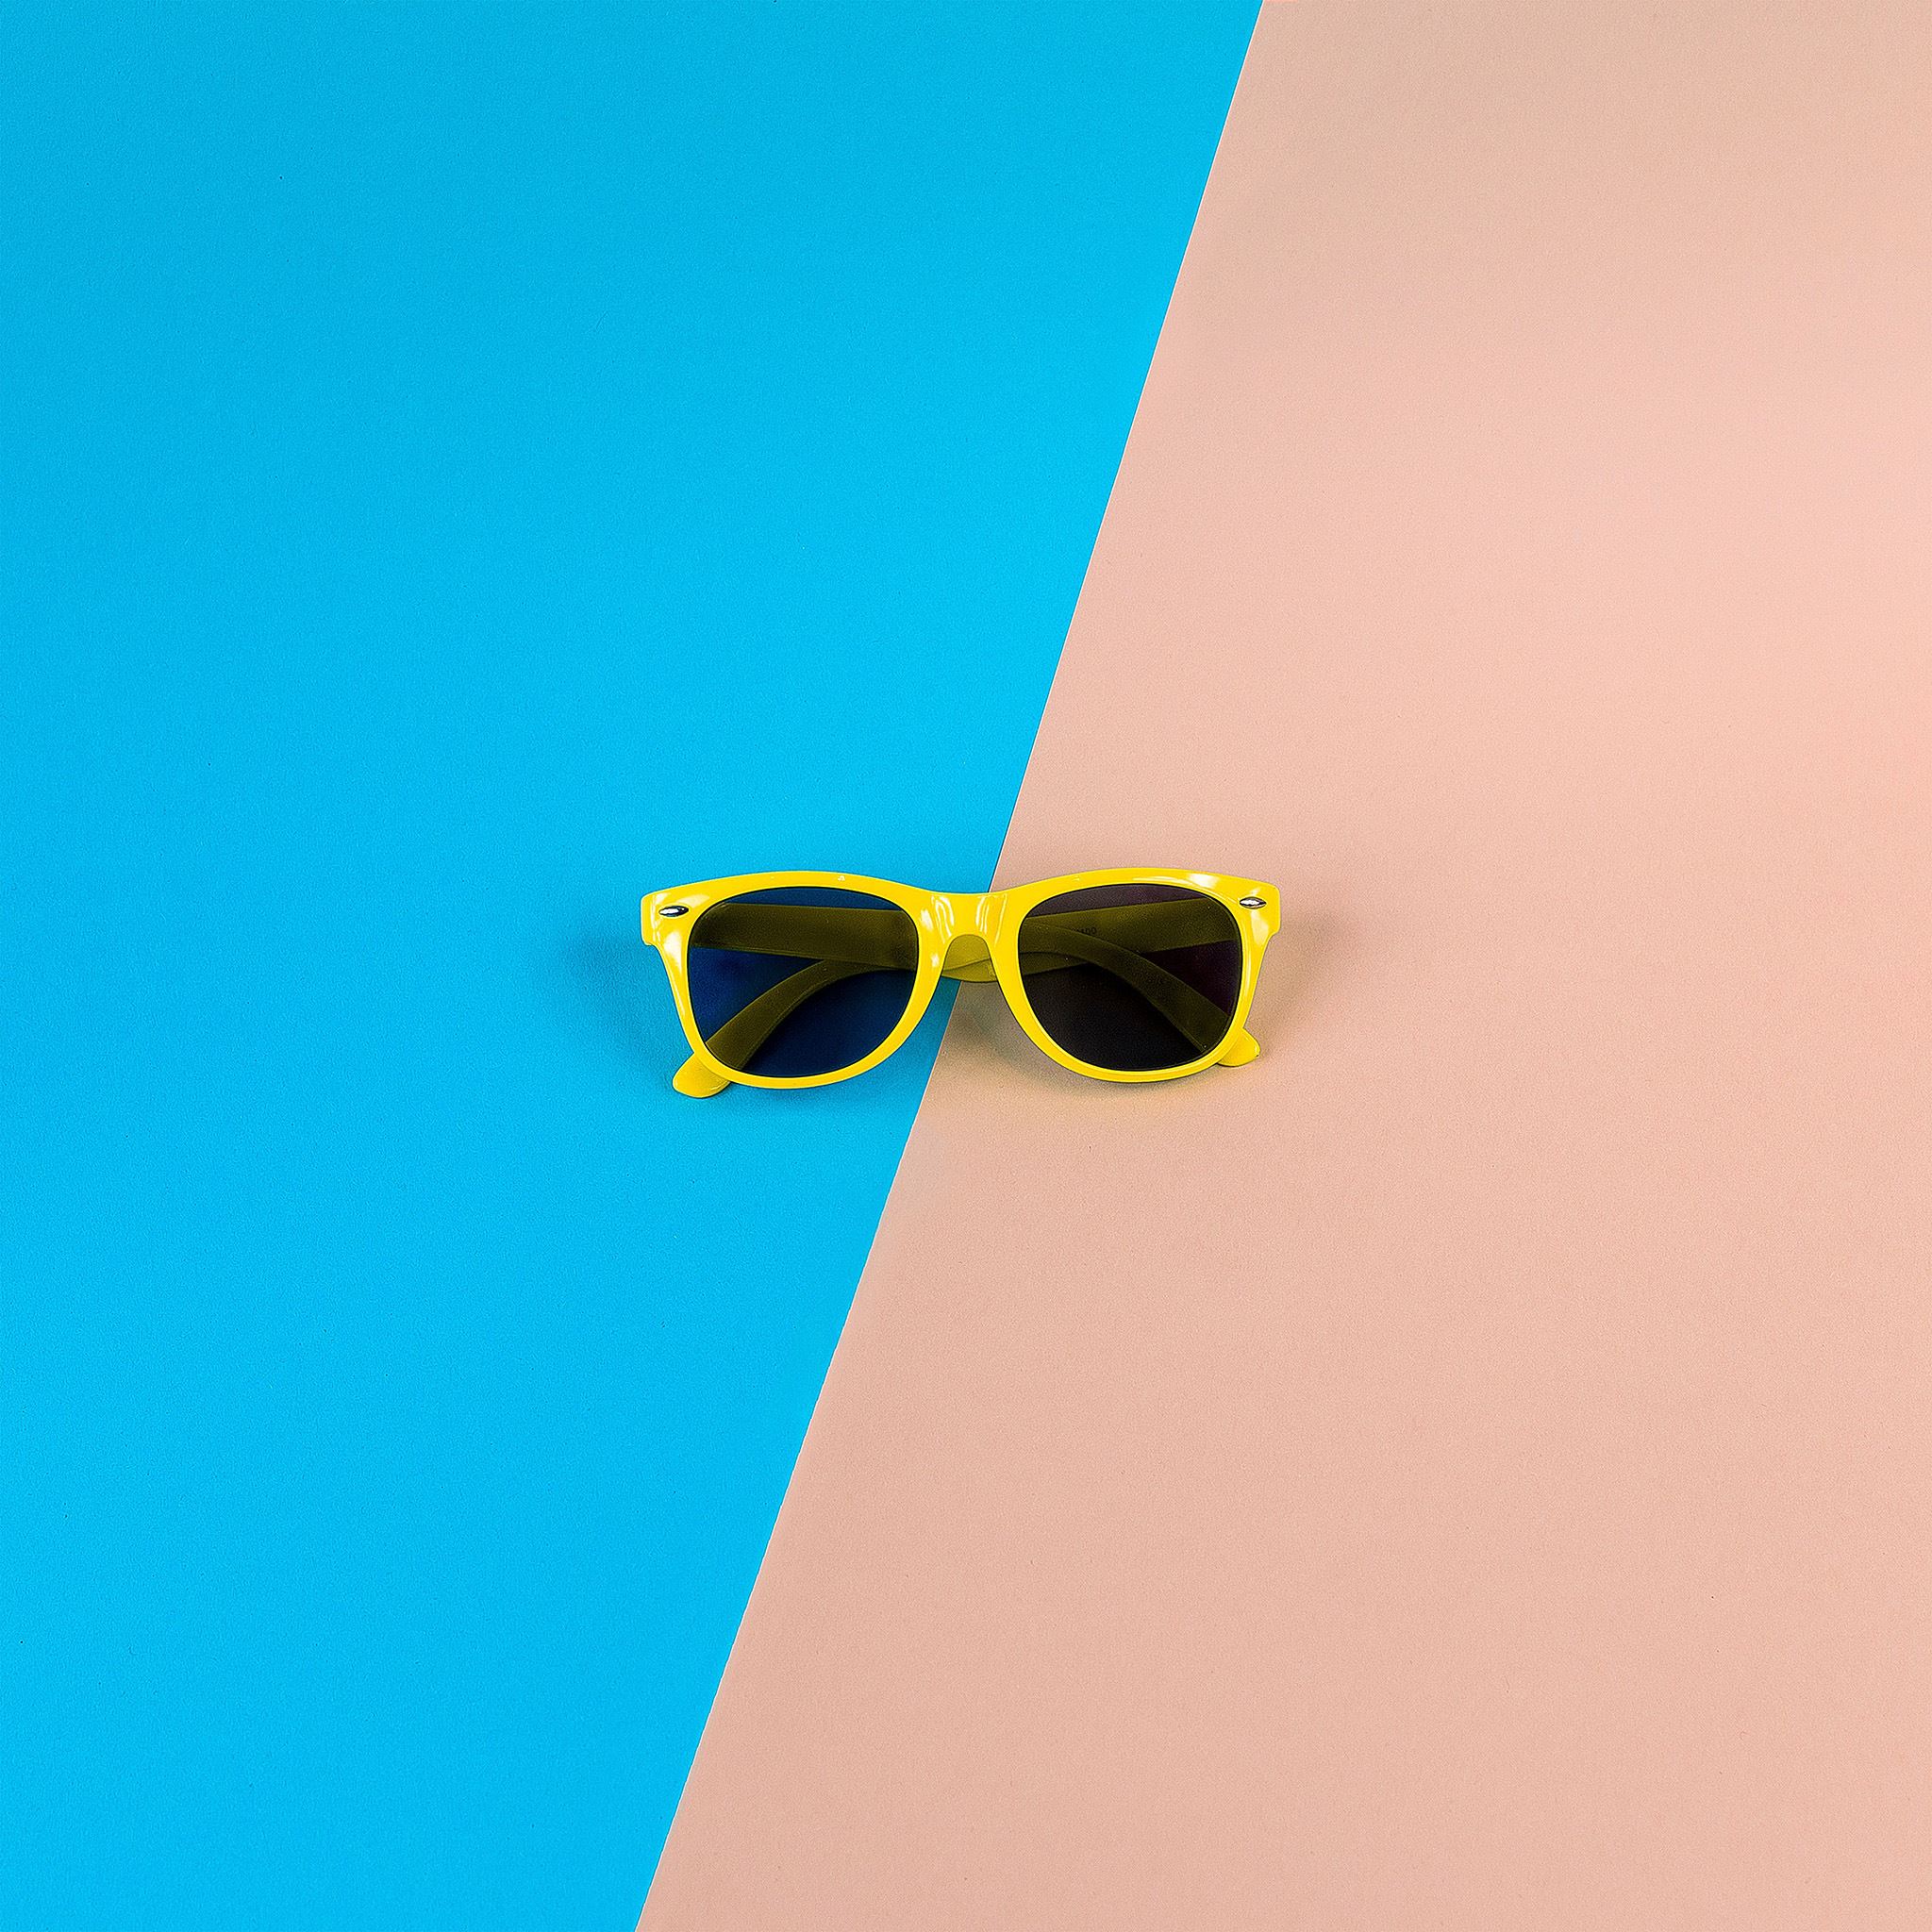 Minimal Glasses Pink Blue Yellow iPad Air wallpaper 